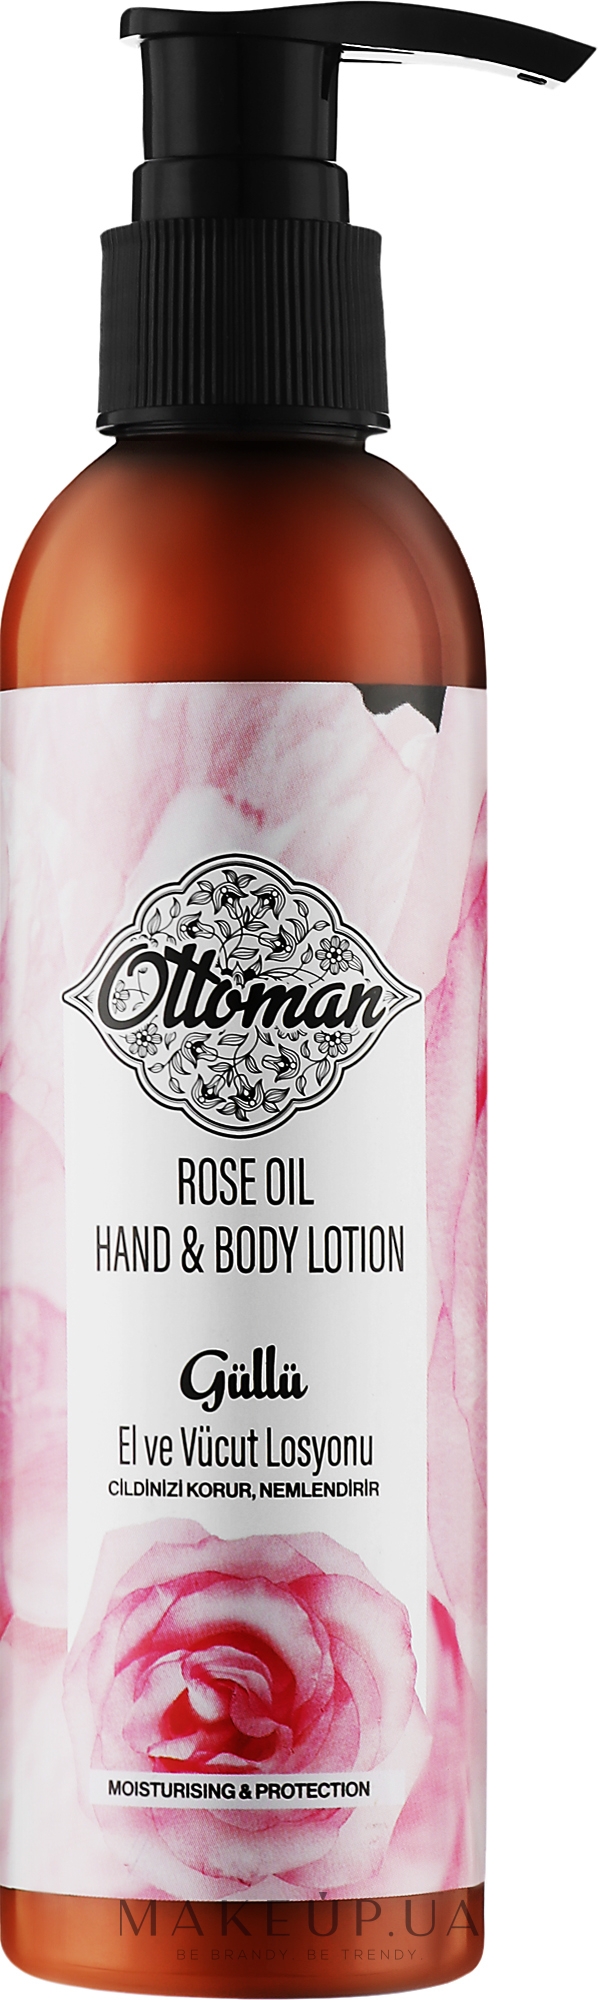 Лосьон для рук и тела "Османская роза" - Dr. Clinic Ottoman Rose Oil Hand & Body Lotion — фото 220ml